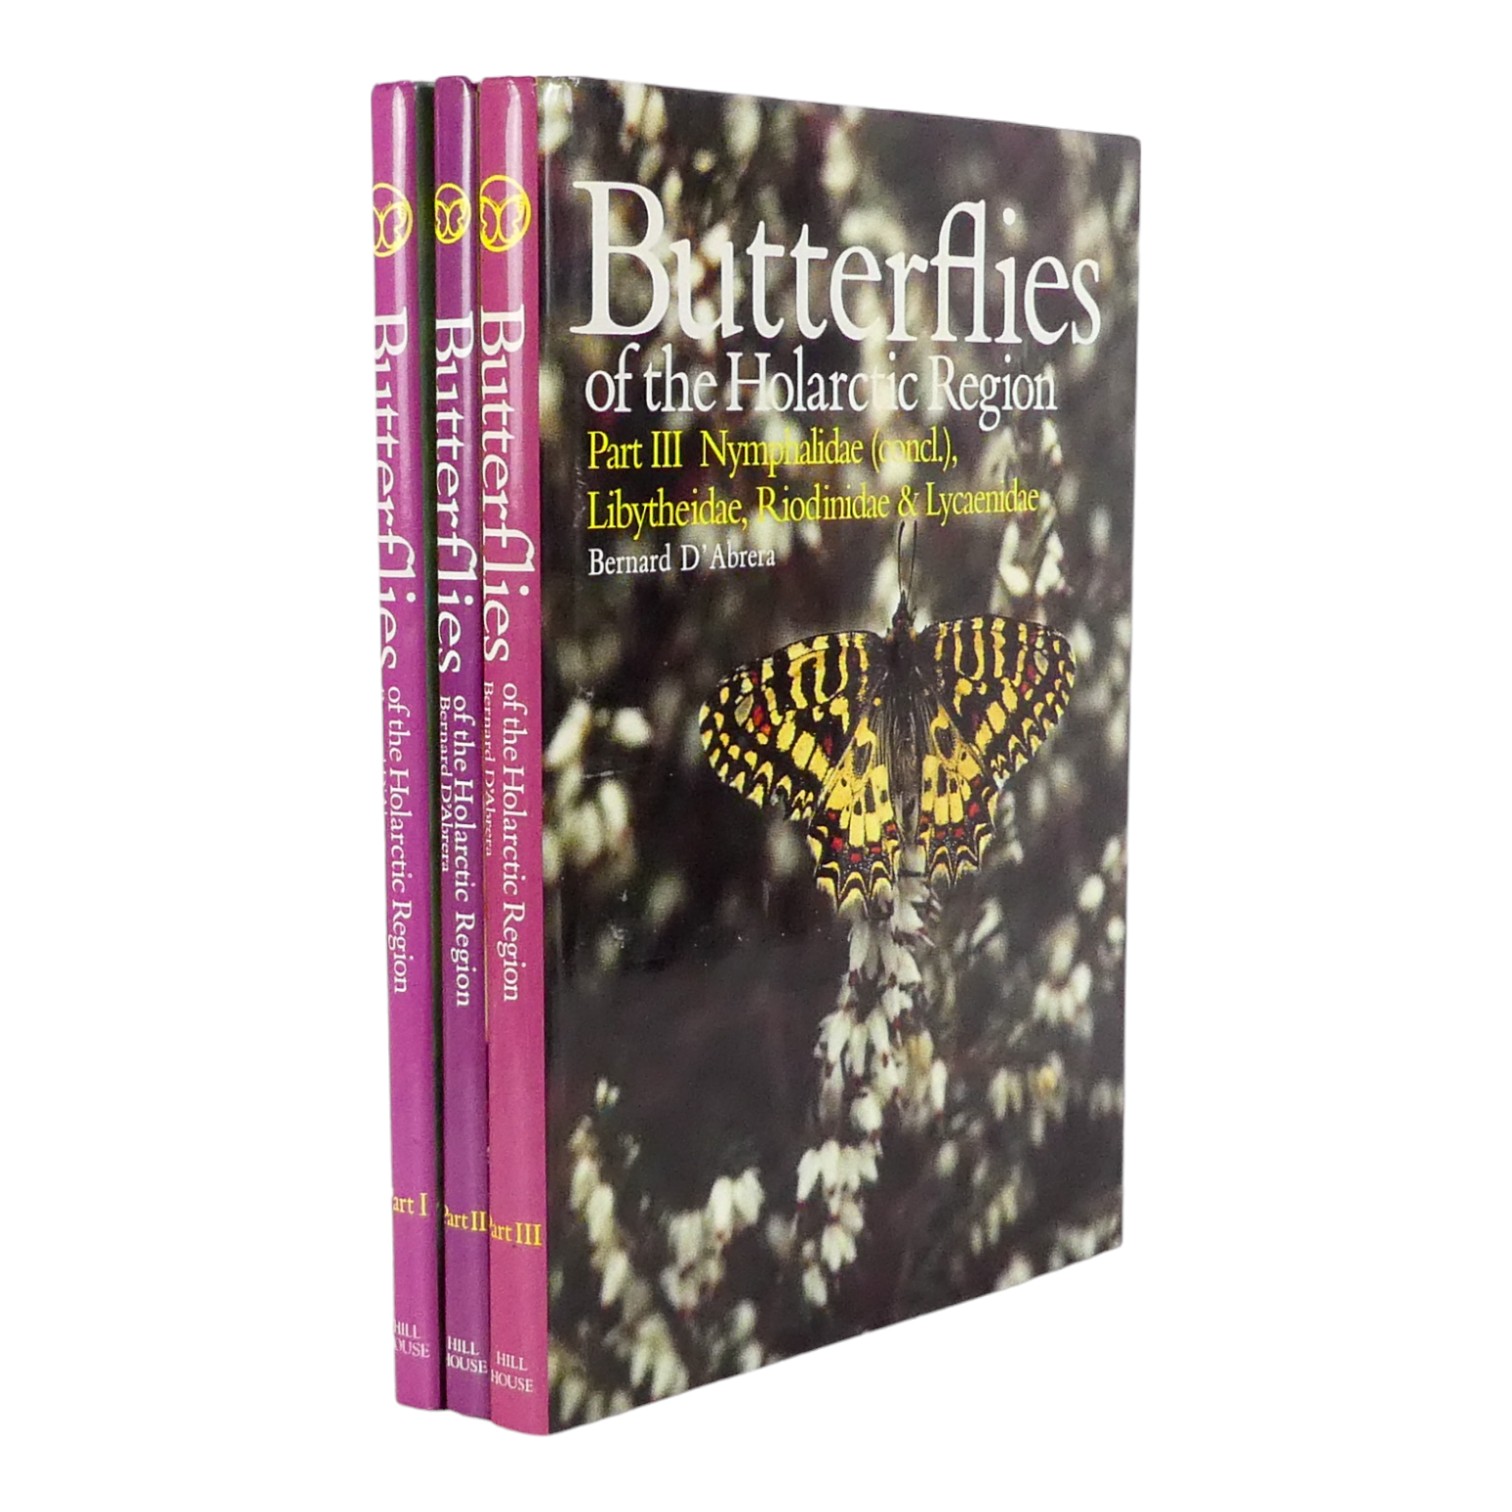 D'ABRERA Bernard, Butterflies of the Holarctic Region - Hill House 1993, three volumes cloth binding